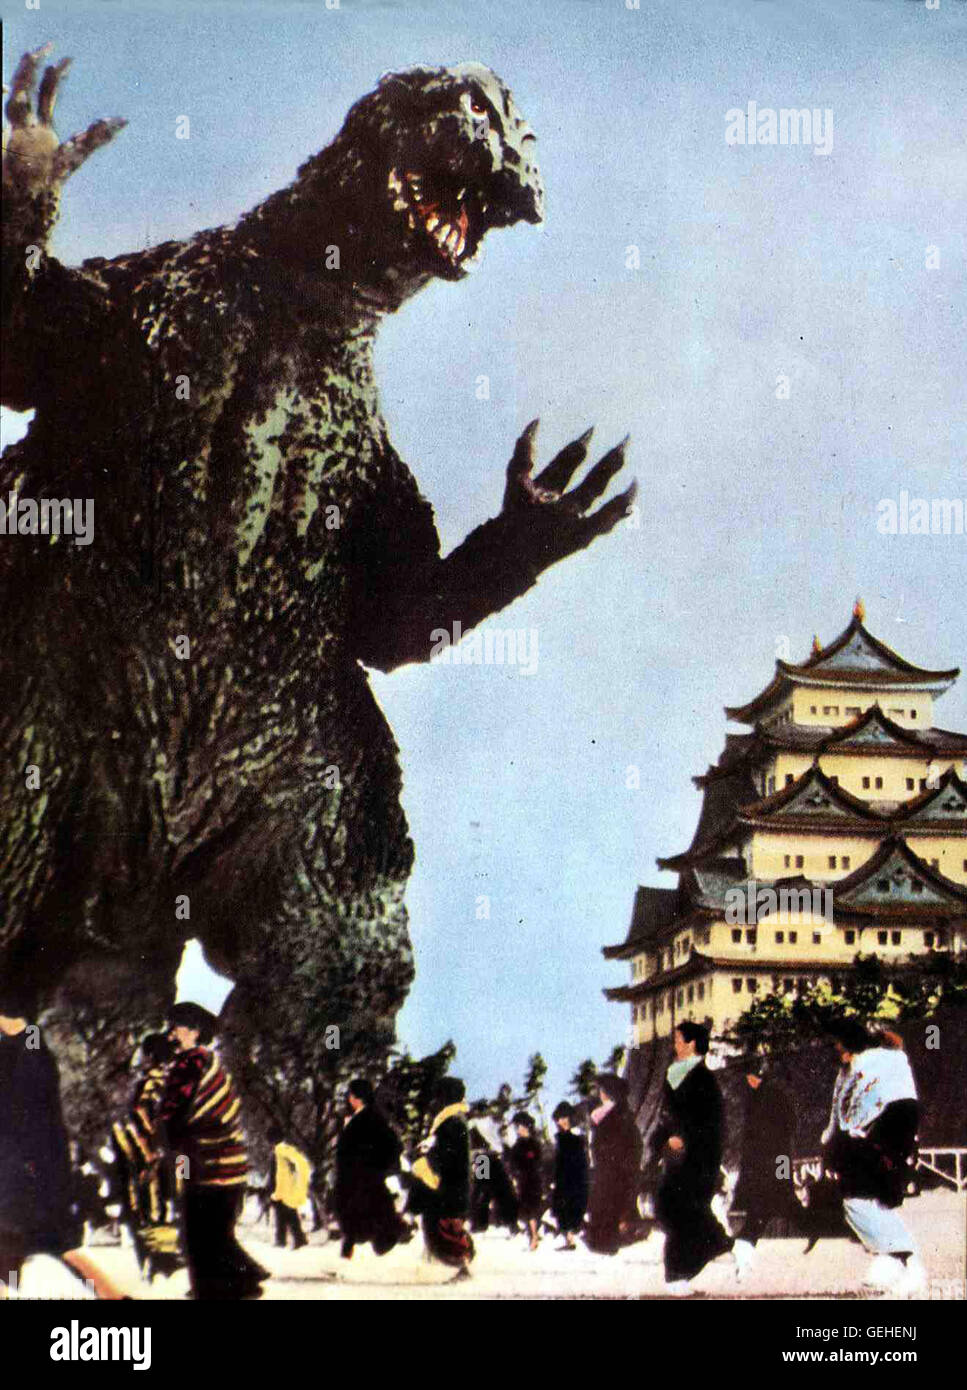 *** Local Caption *** 1964, 1960er, 1960s, Film, Godzilla, Godzilla Vs. The Thing, Japan, Monster, Science Fiction, Godzilla - Godzilla Und Die Urweltraupen Stock Photo